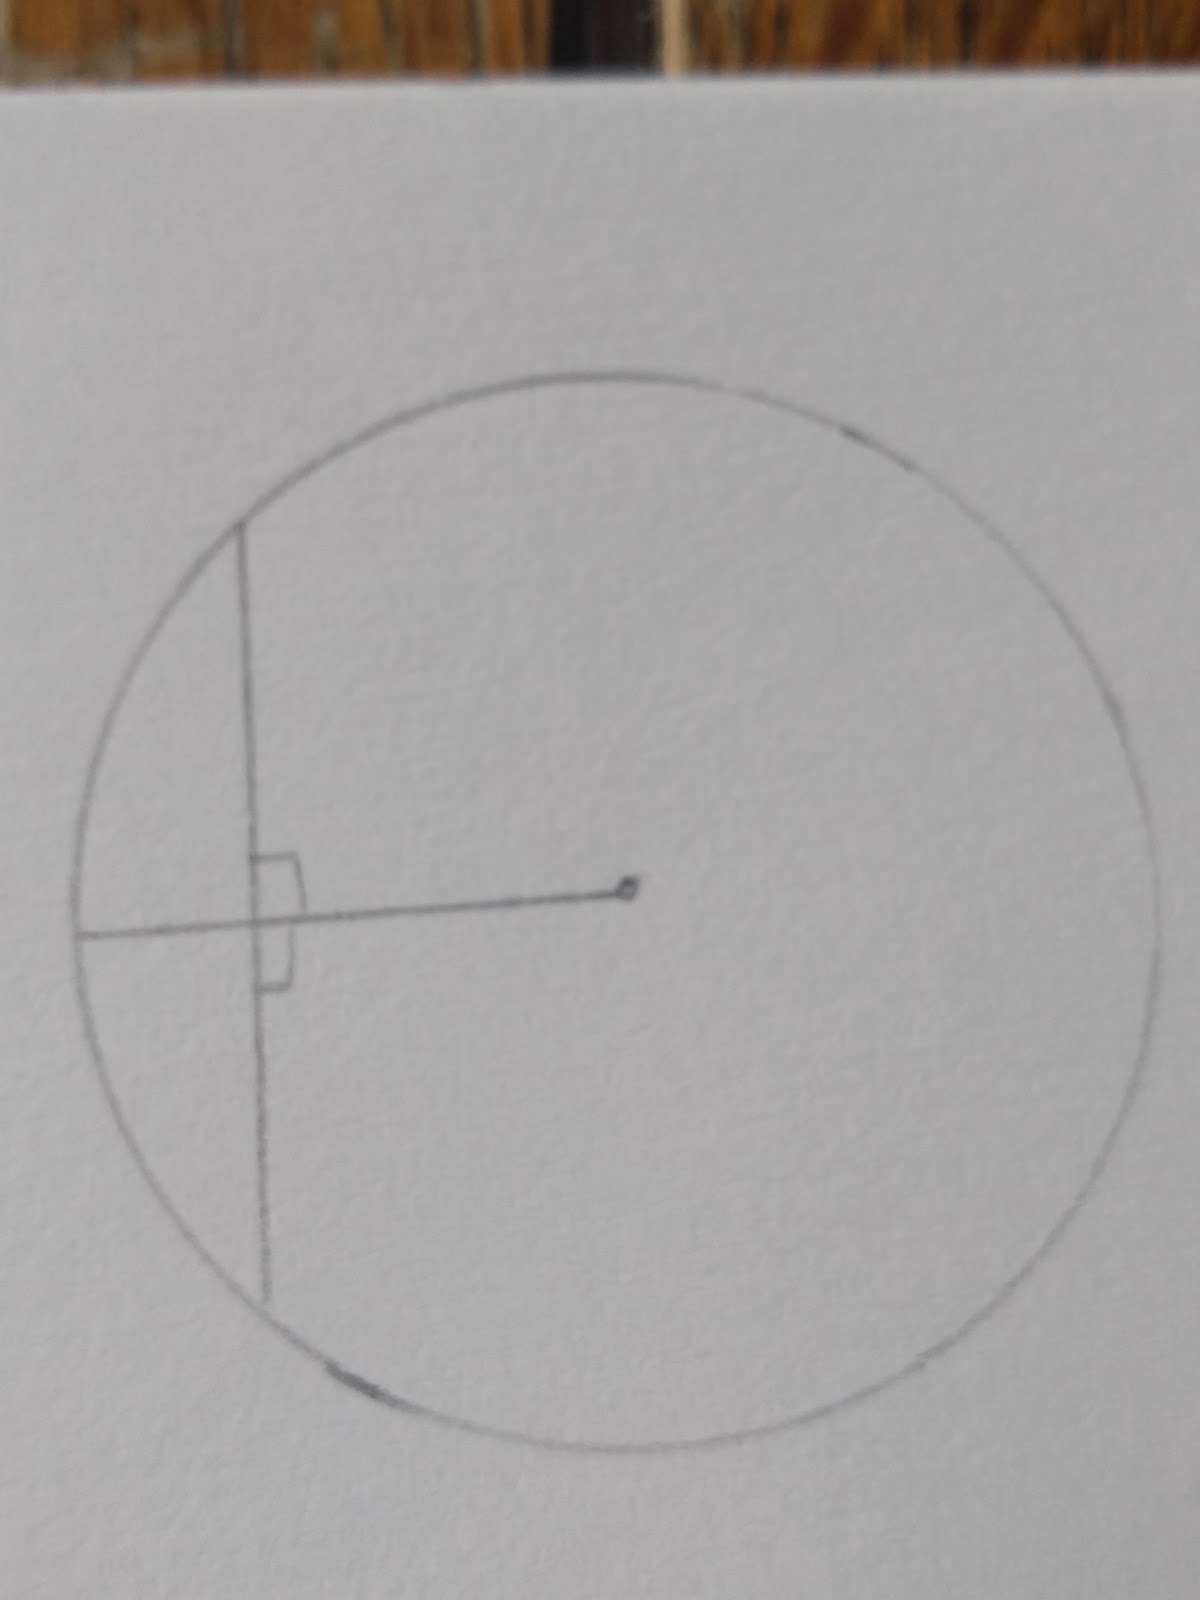 Circle Theorems, figure 1